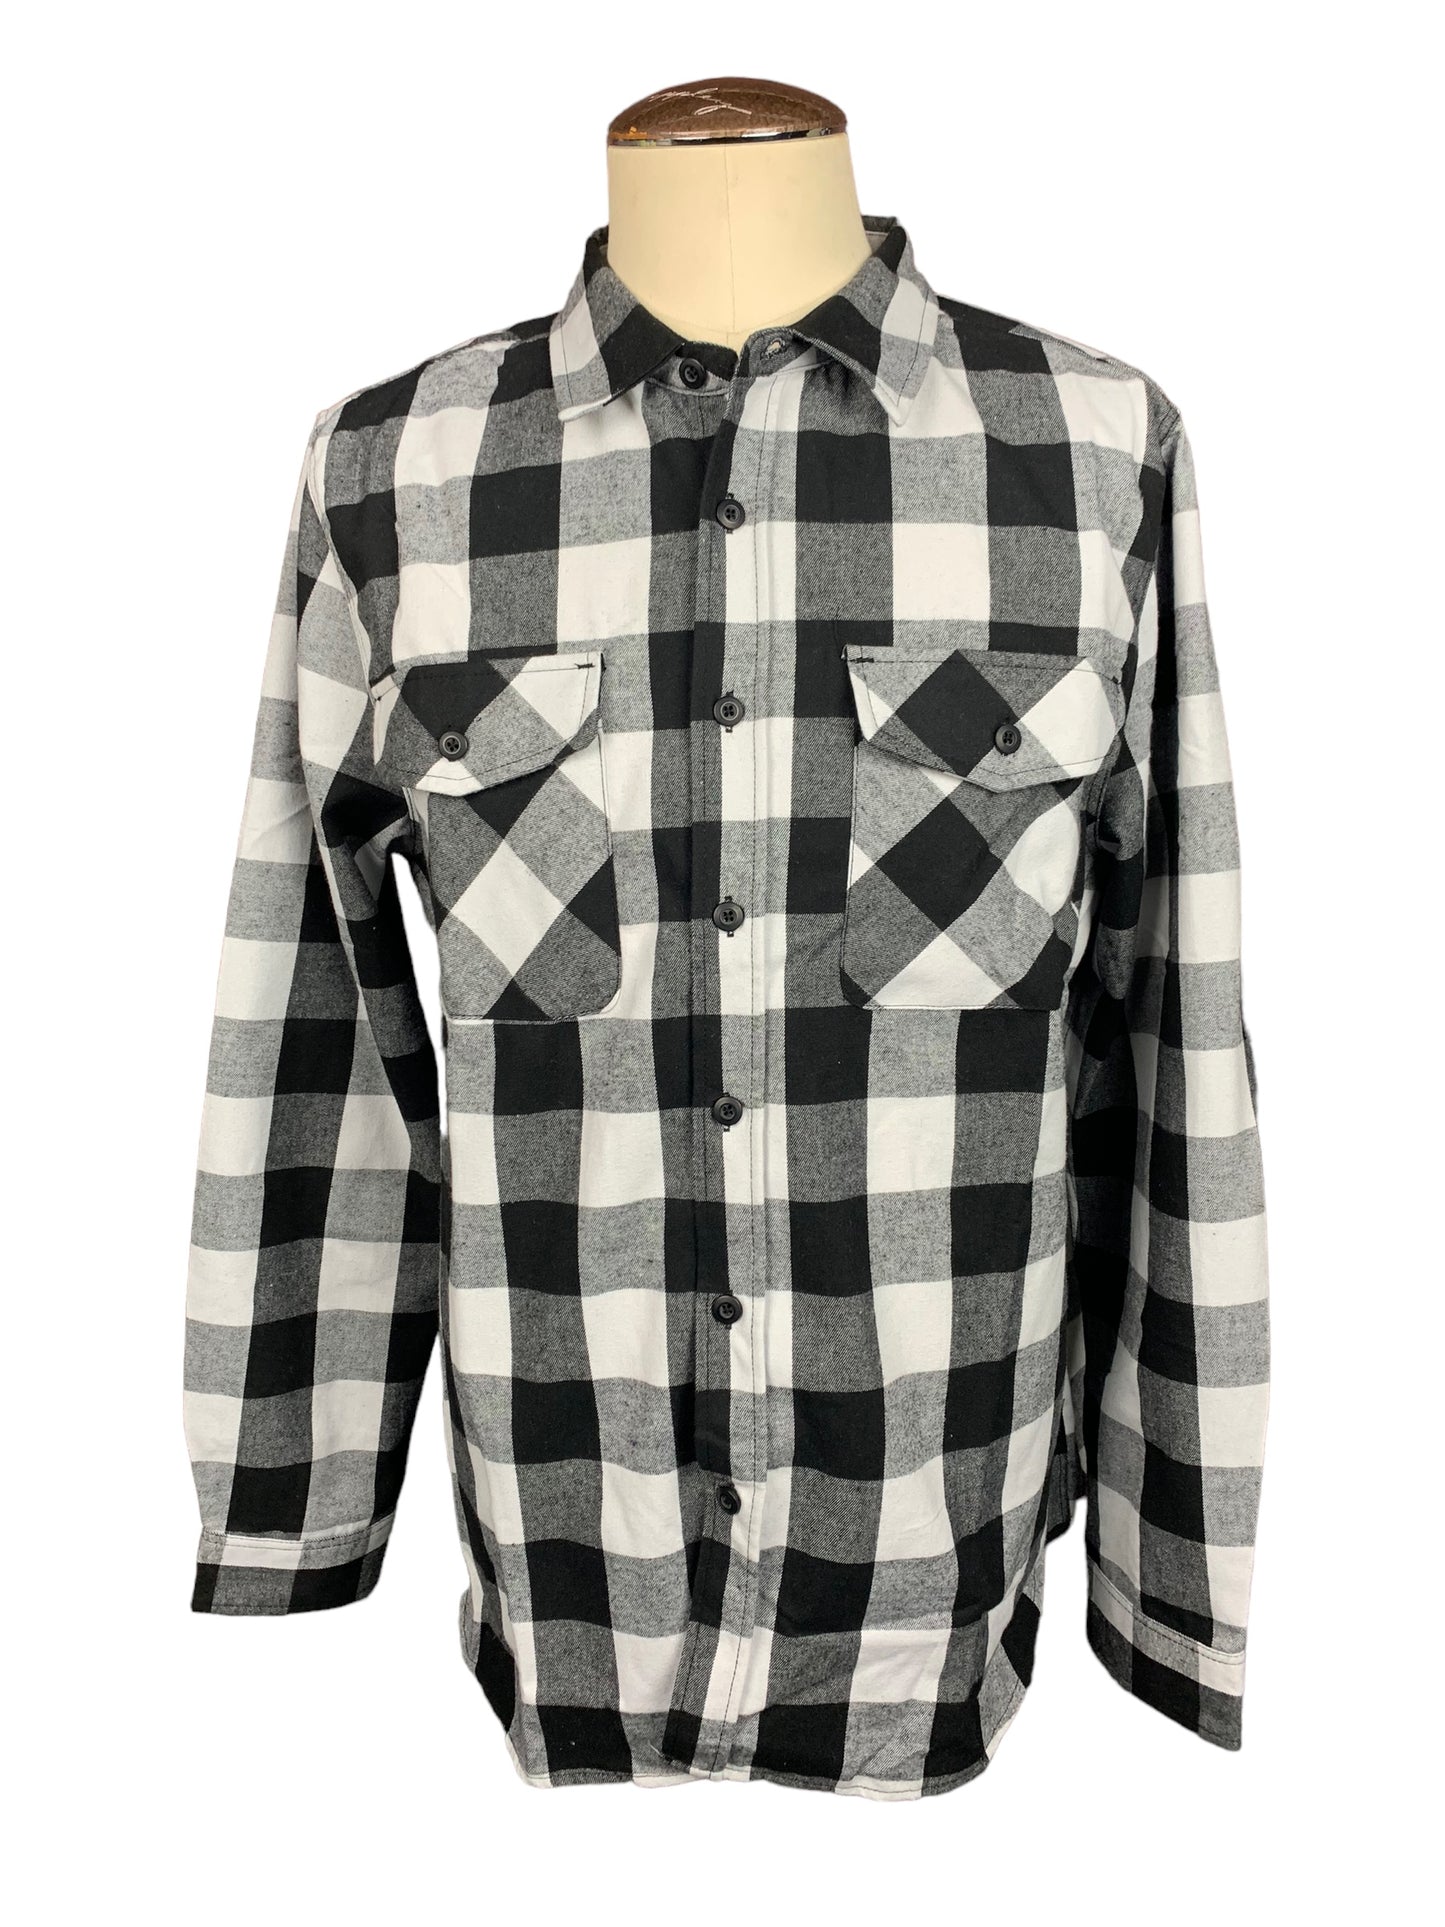 Blackcraft Cult Flannel Shirt Custom Rework XL